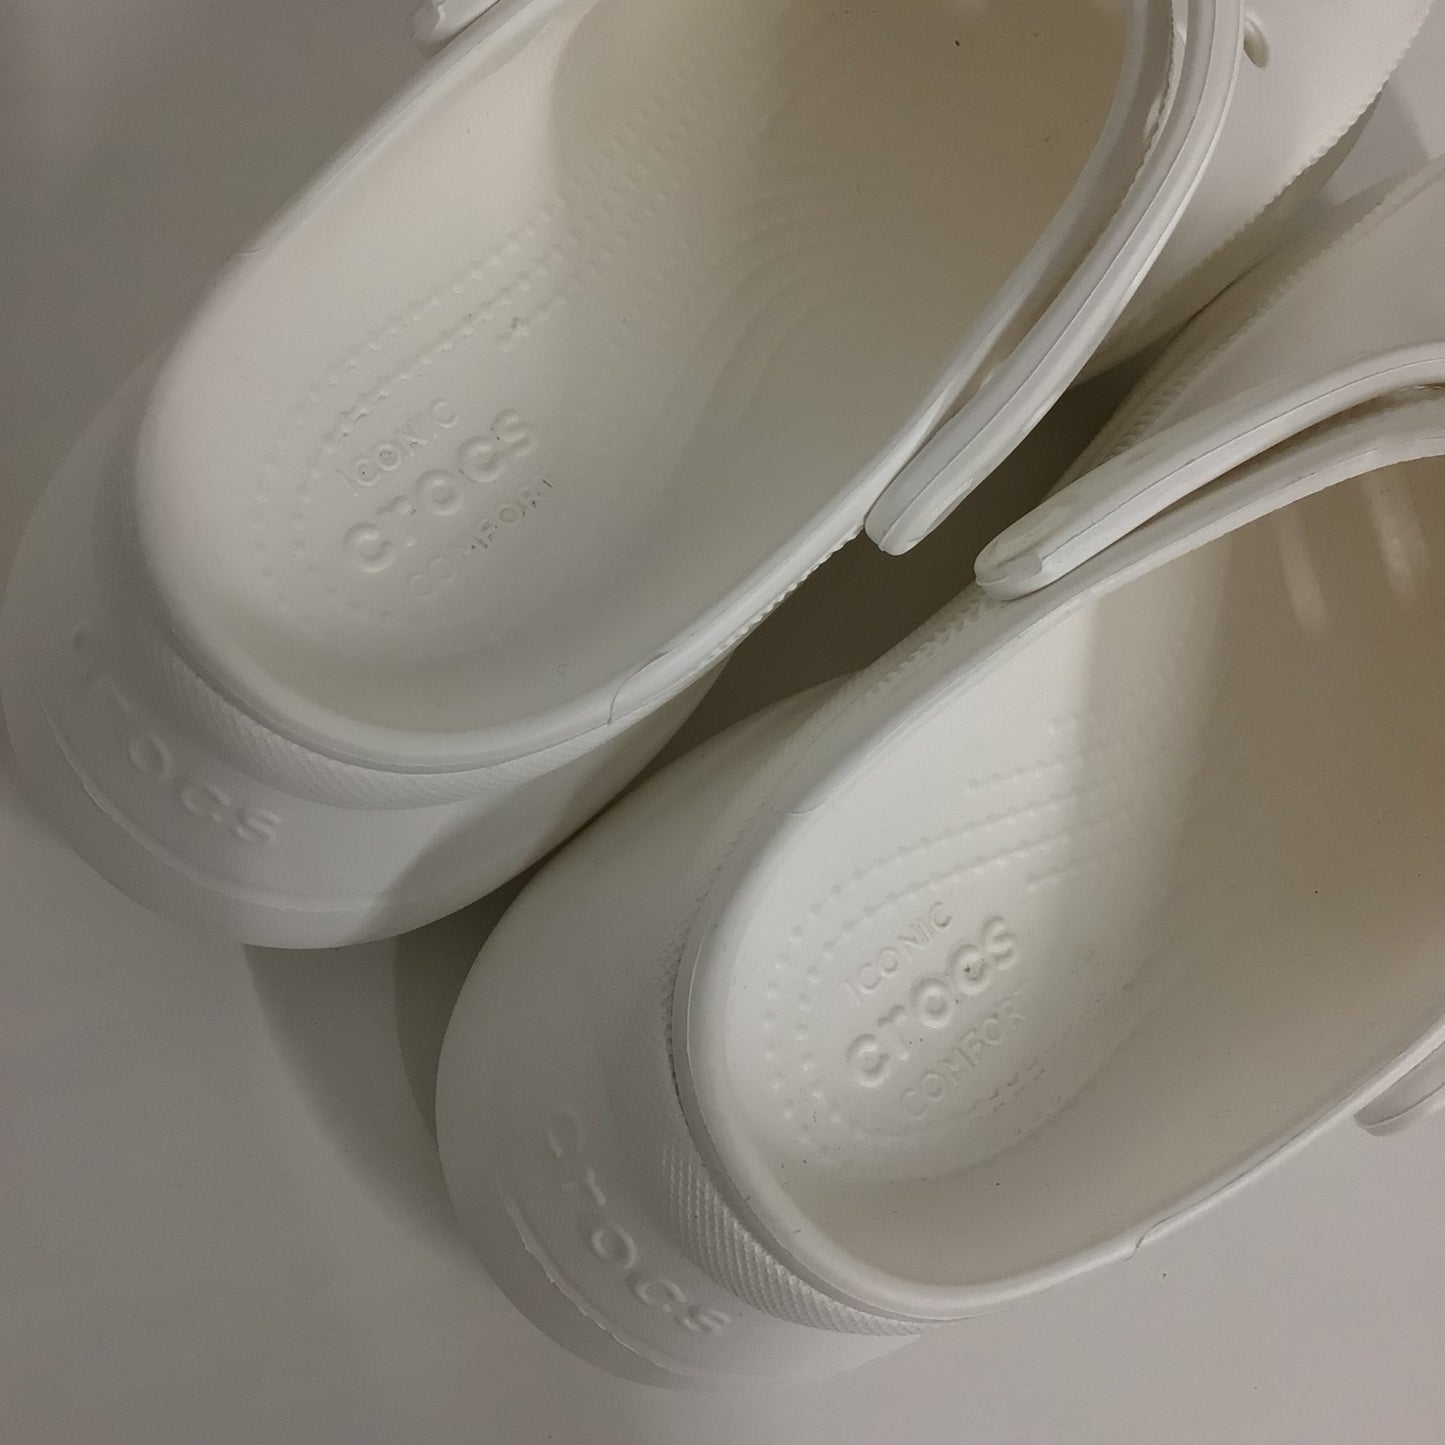 Crocs White Chunky Platform Sandals Size w10